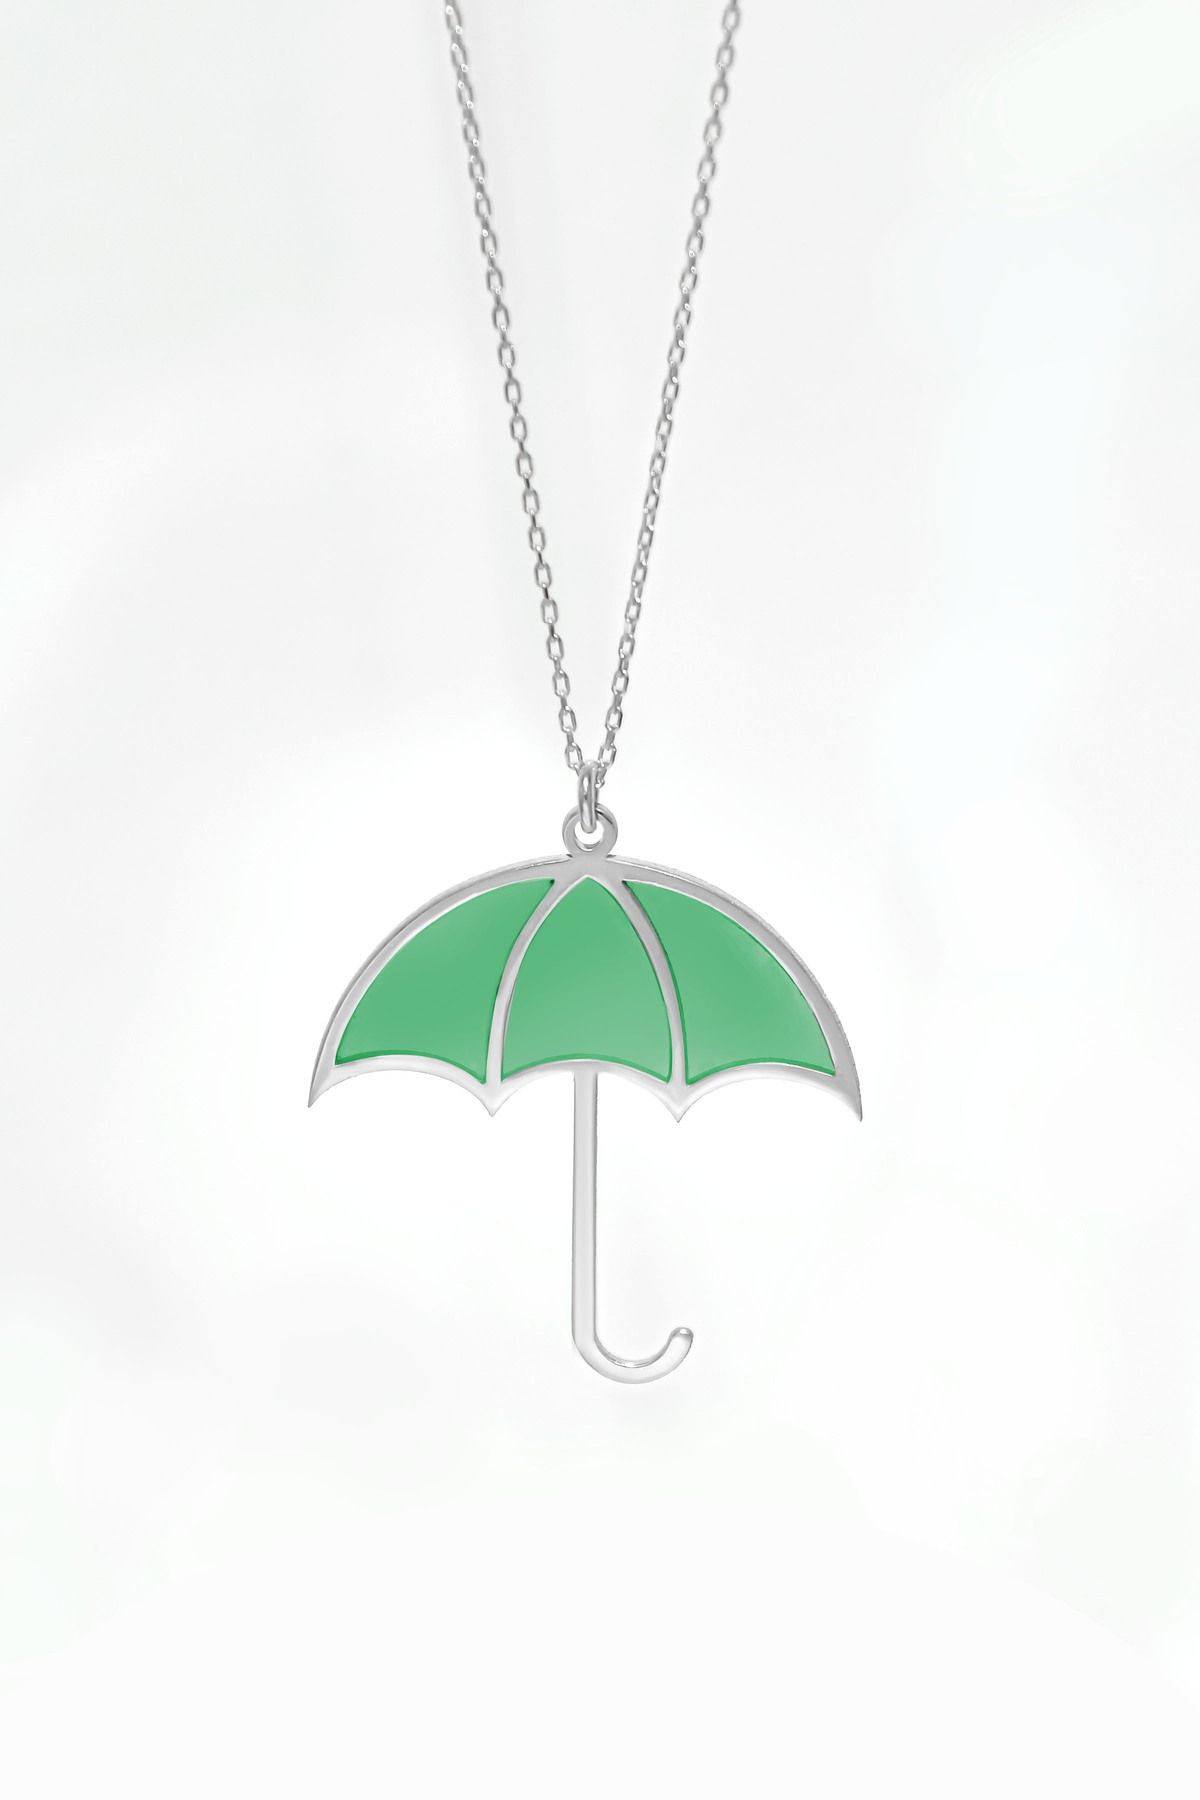 Papatya Silver 925 Ayar Gümüş Rodyum Kaplama Parlayan Rüya Serisi Tasarım Ebruli Yeşil Cam Boyalı Şemsiye Kolye